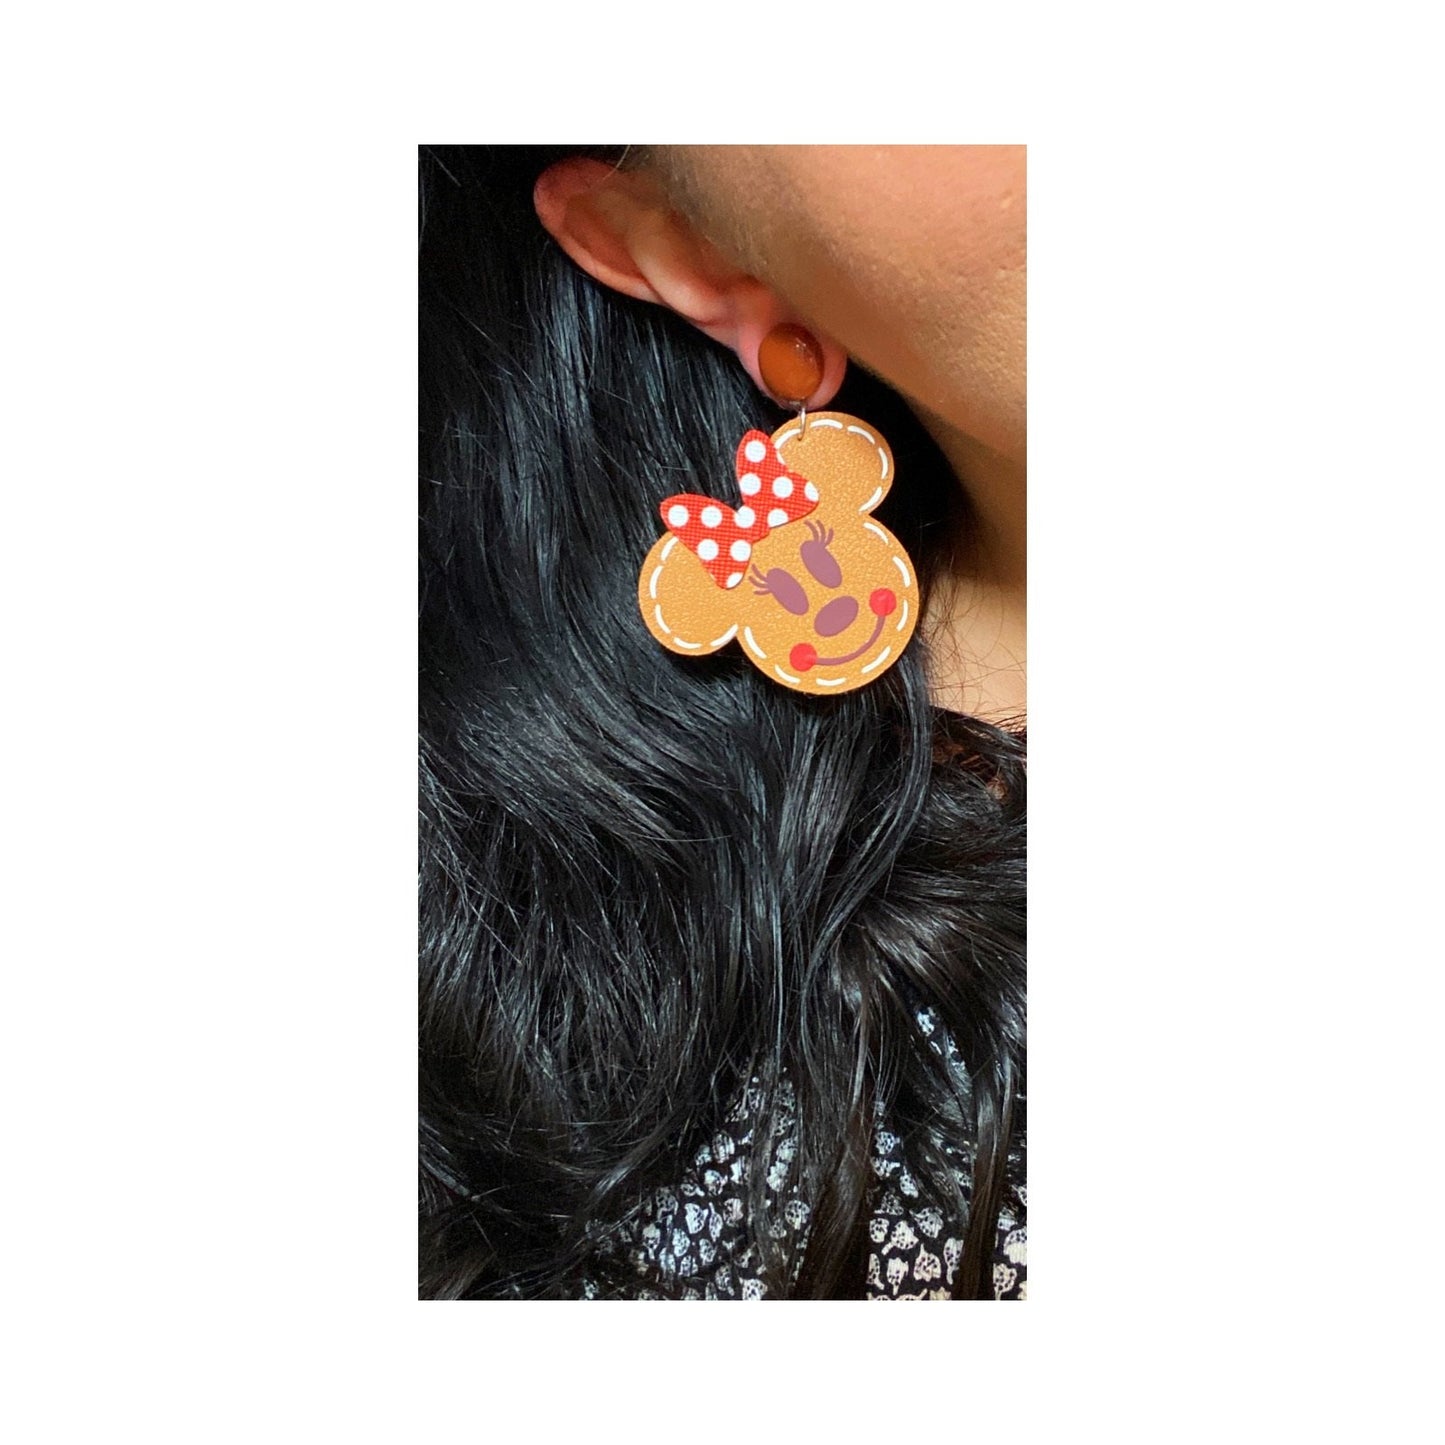 Mouse Gingerbread Head Drop Earrings - Faux Leather